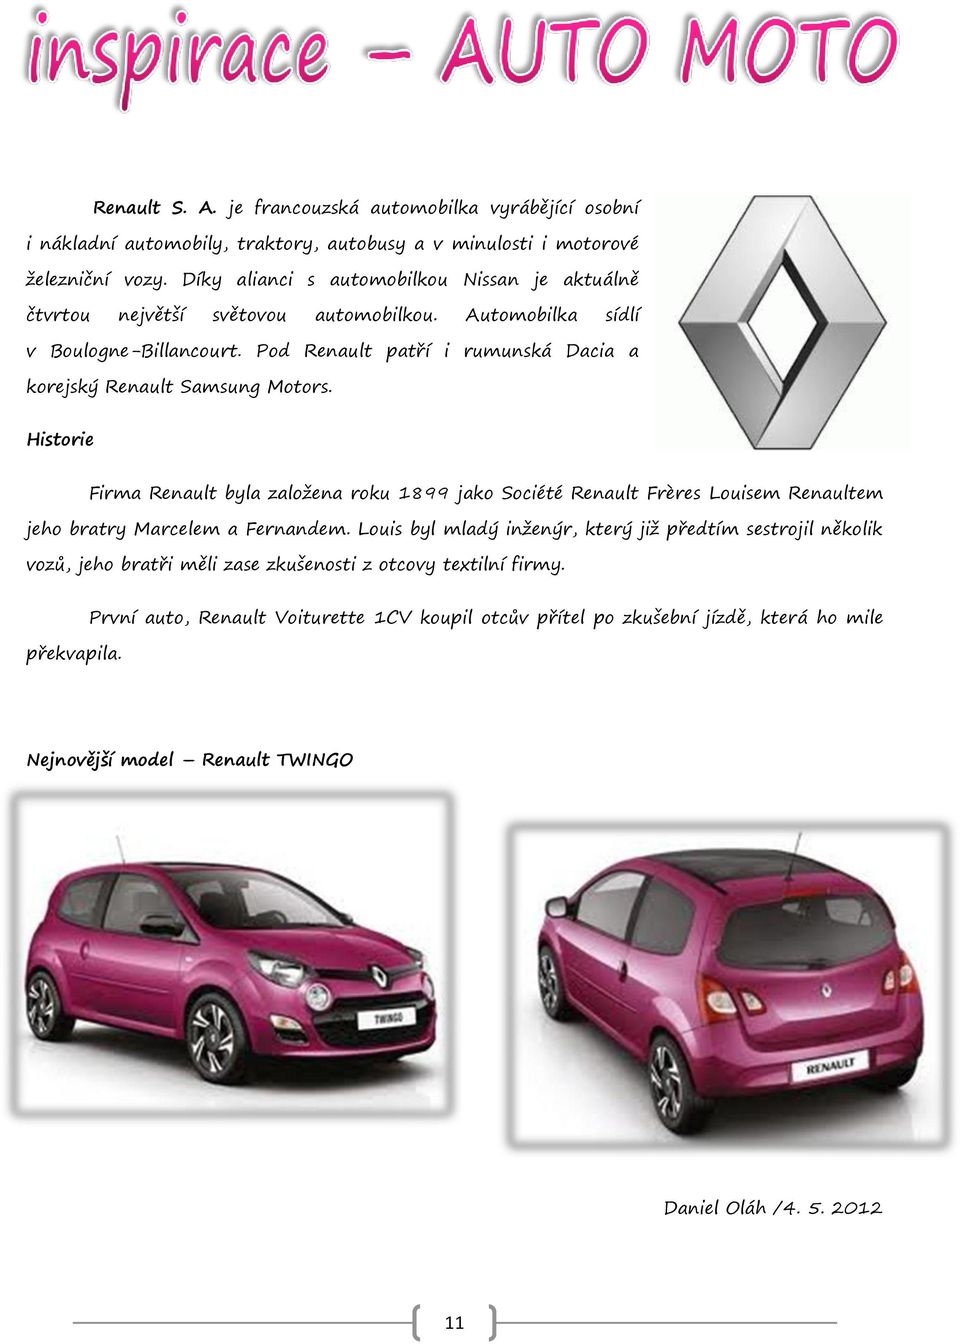 Pod Renault patří i rumunská Dacia a korejský Renault Samsung Motors.